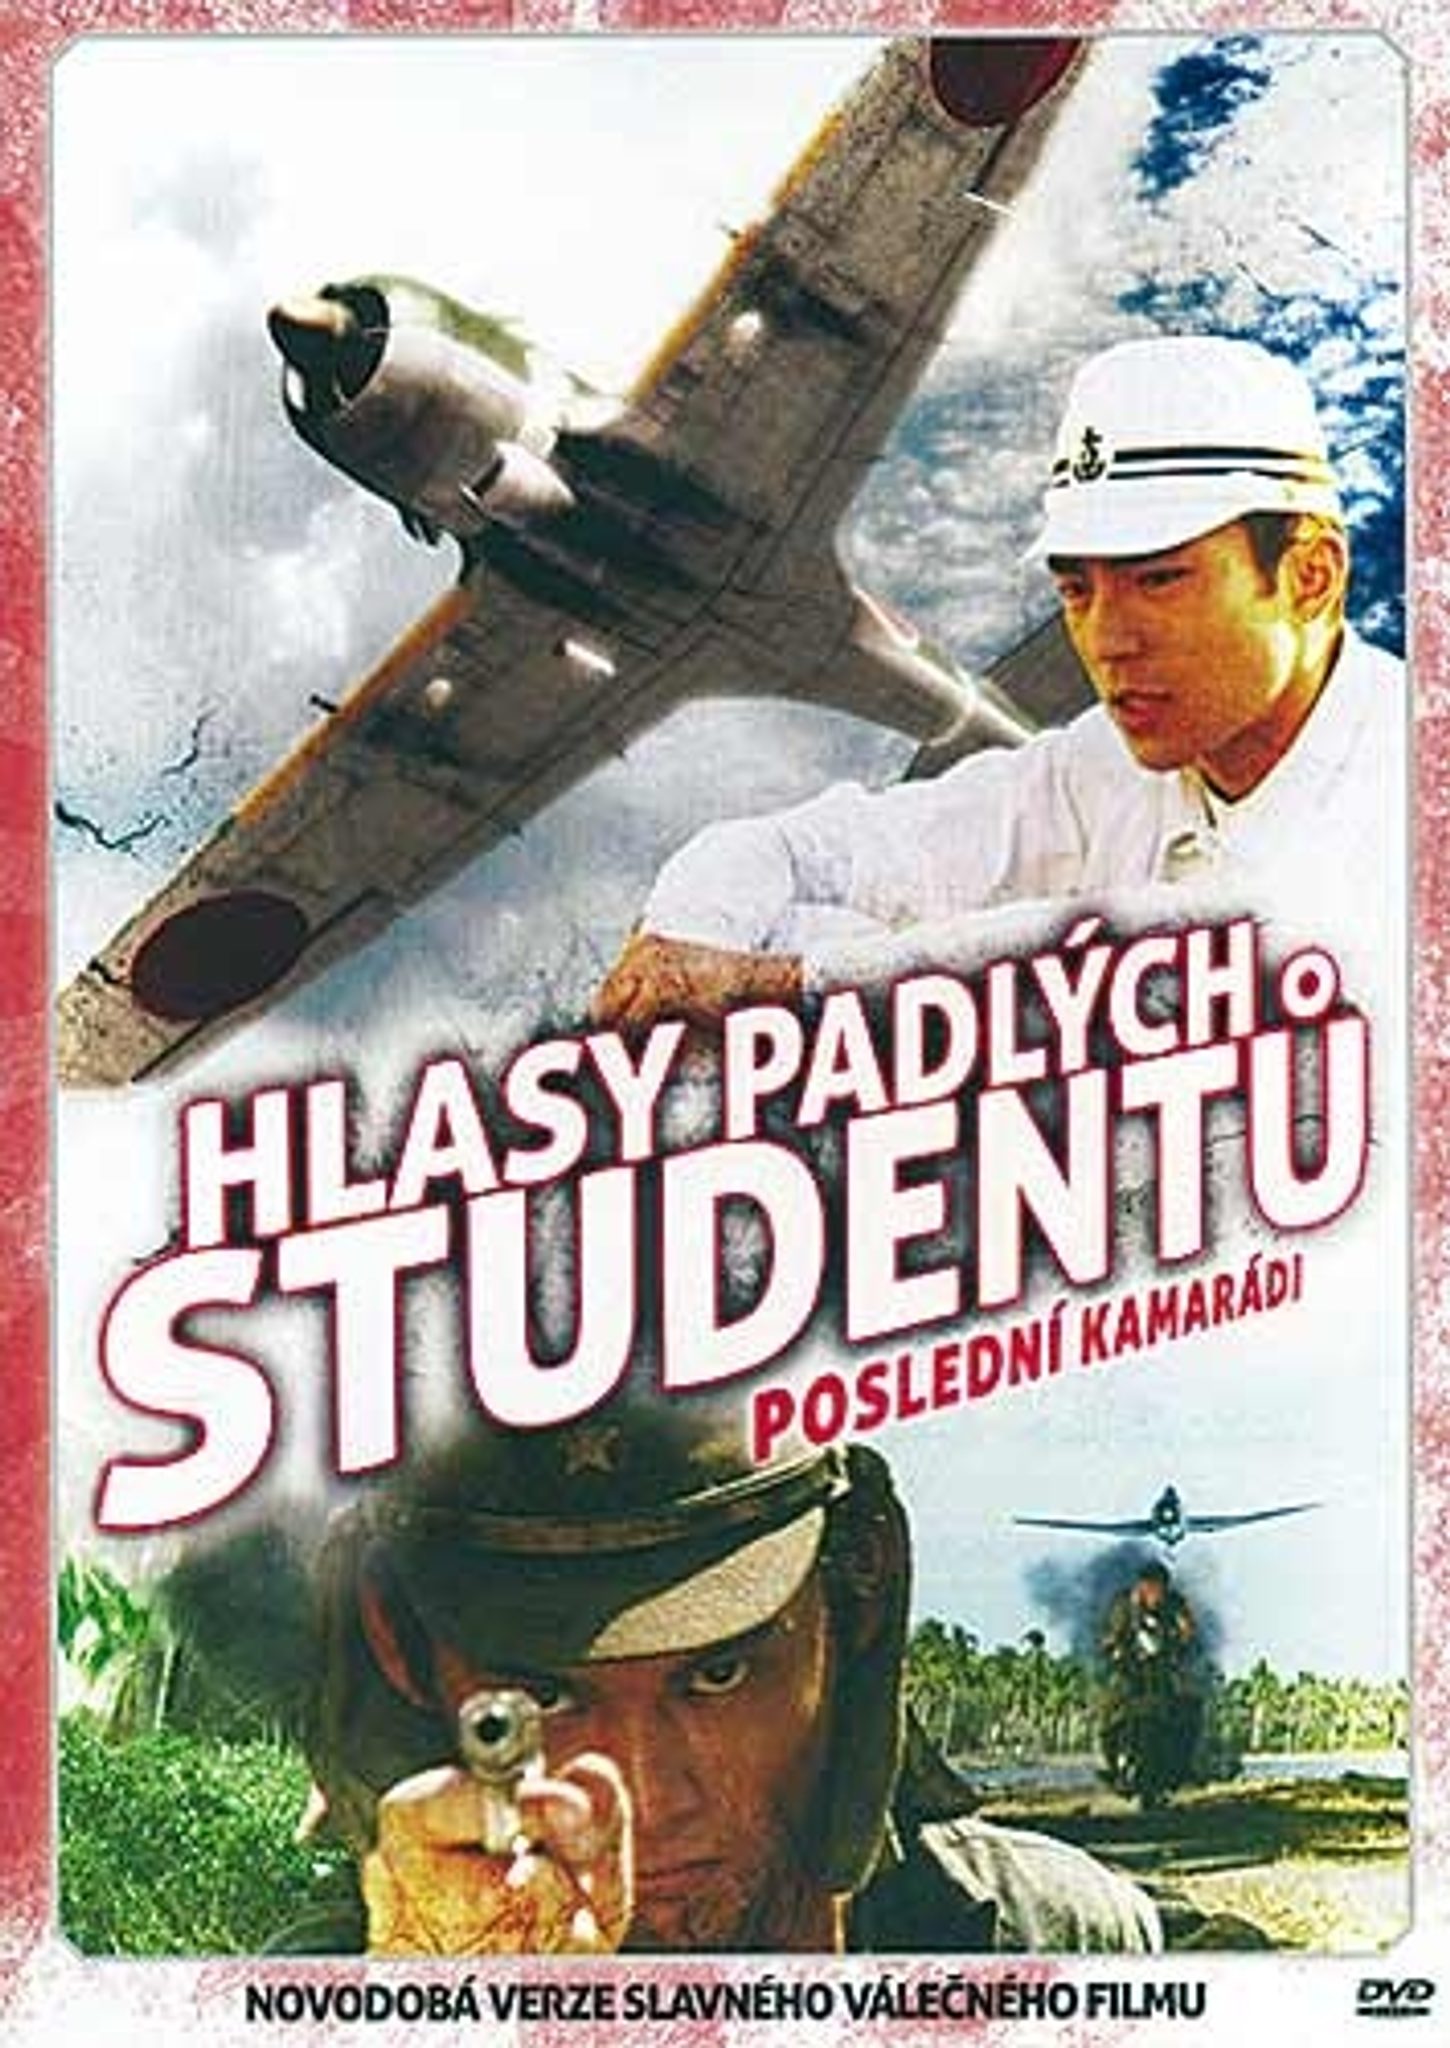 DVD Hlasy padlch student: Posledn kamardi